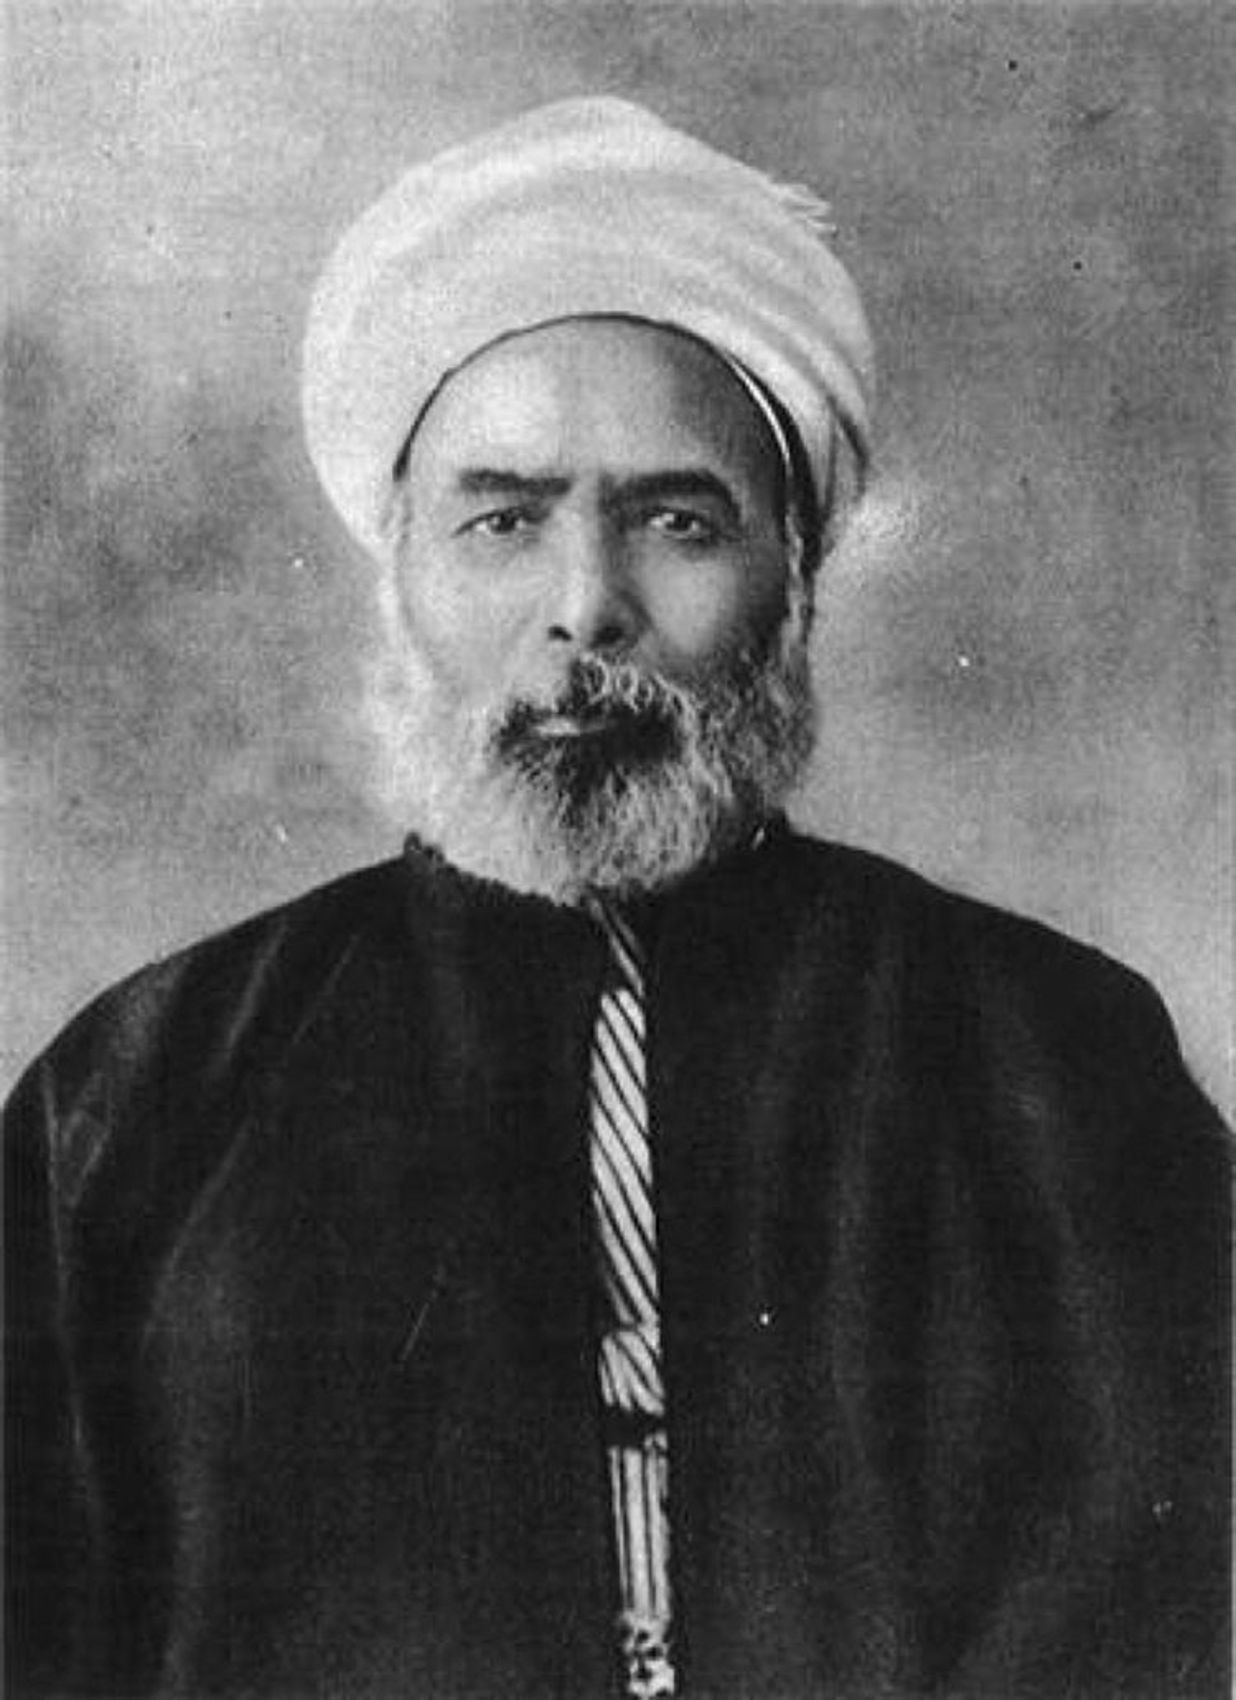 A photo of Sheikh Abduh